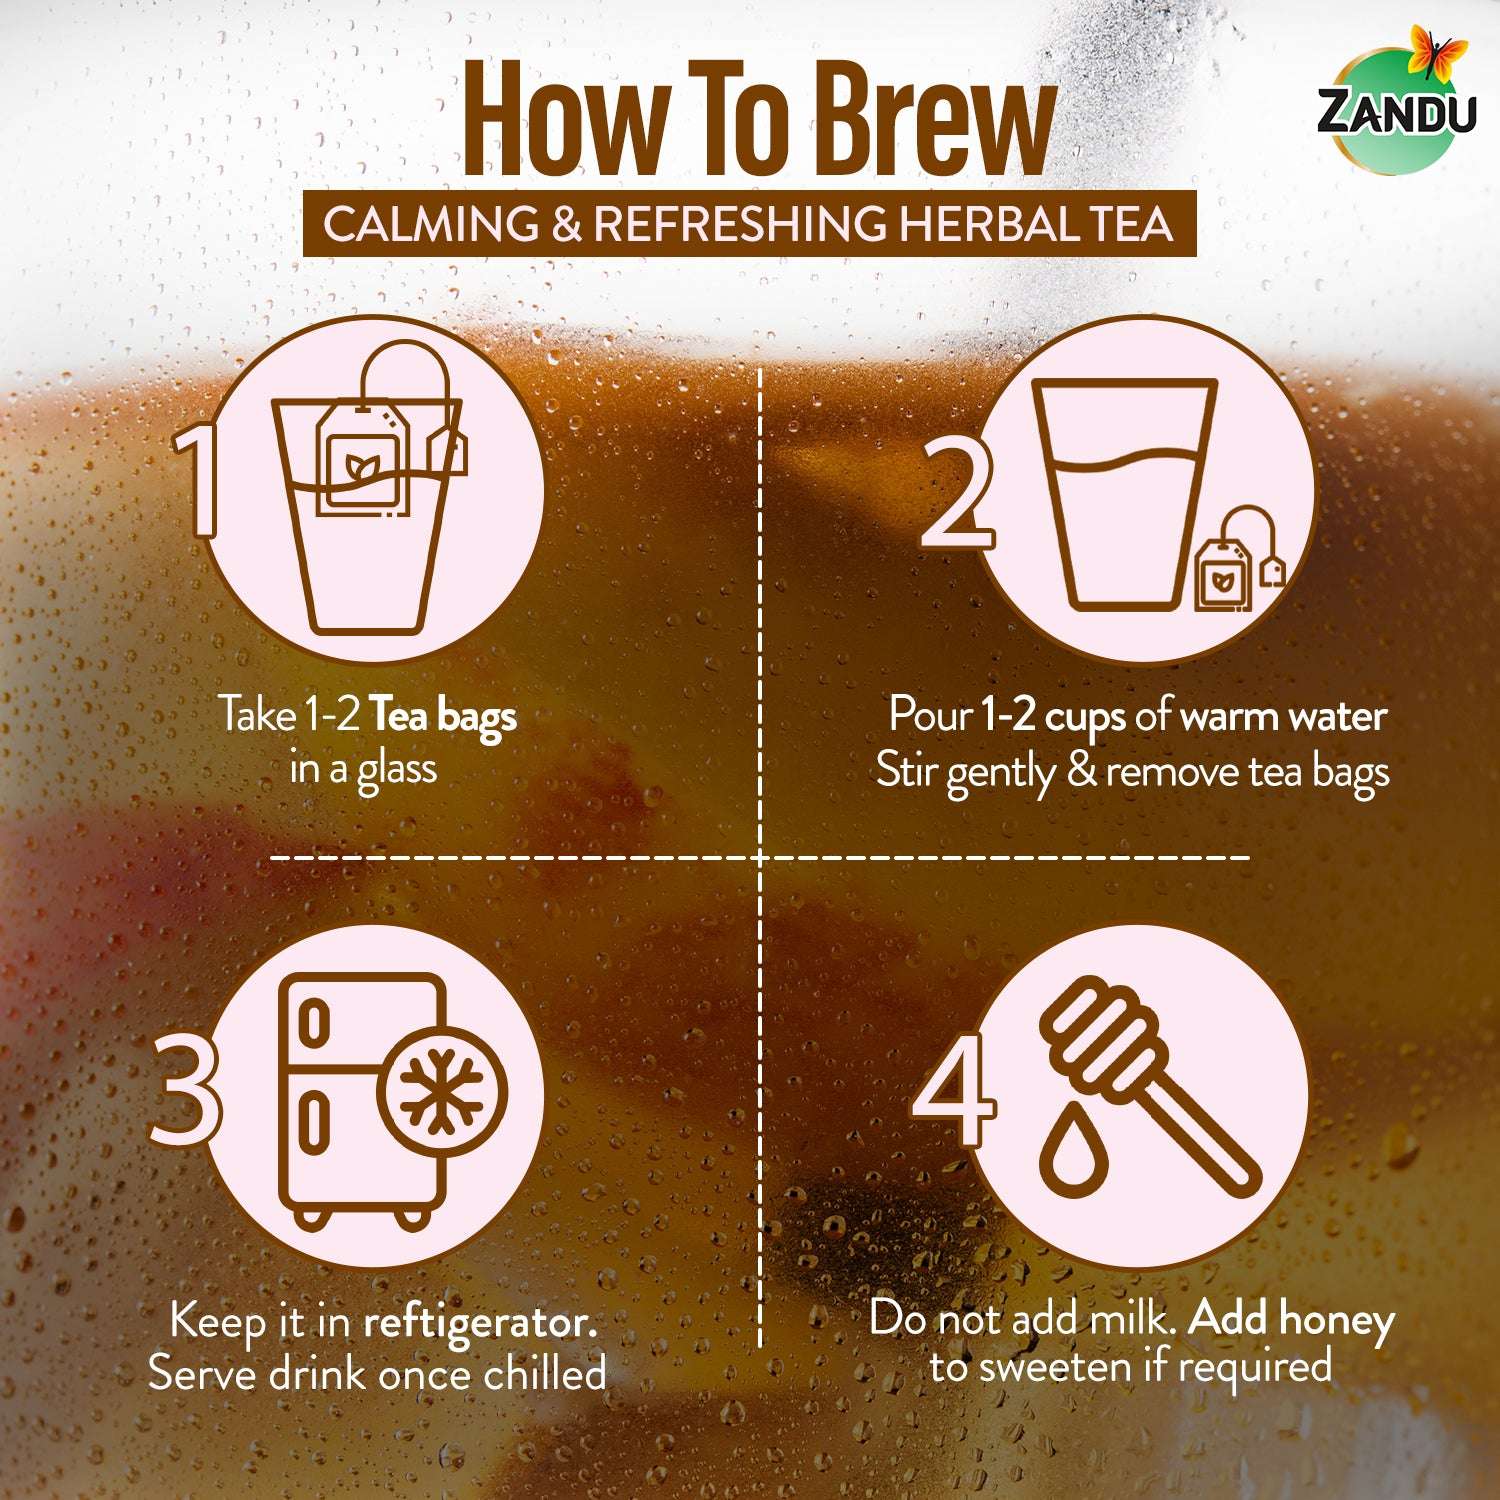 How to use Zandu herbal ice tea?